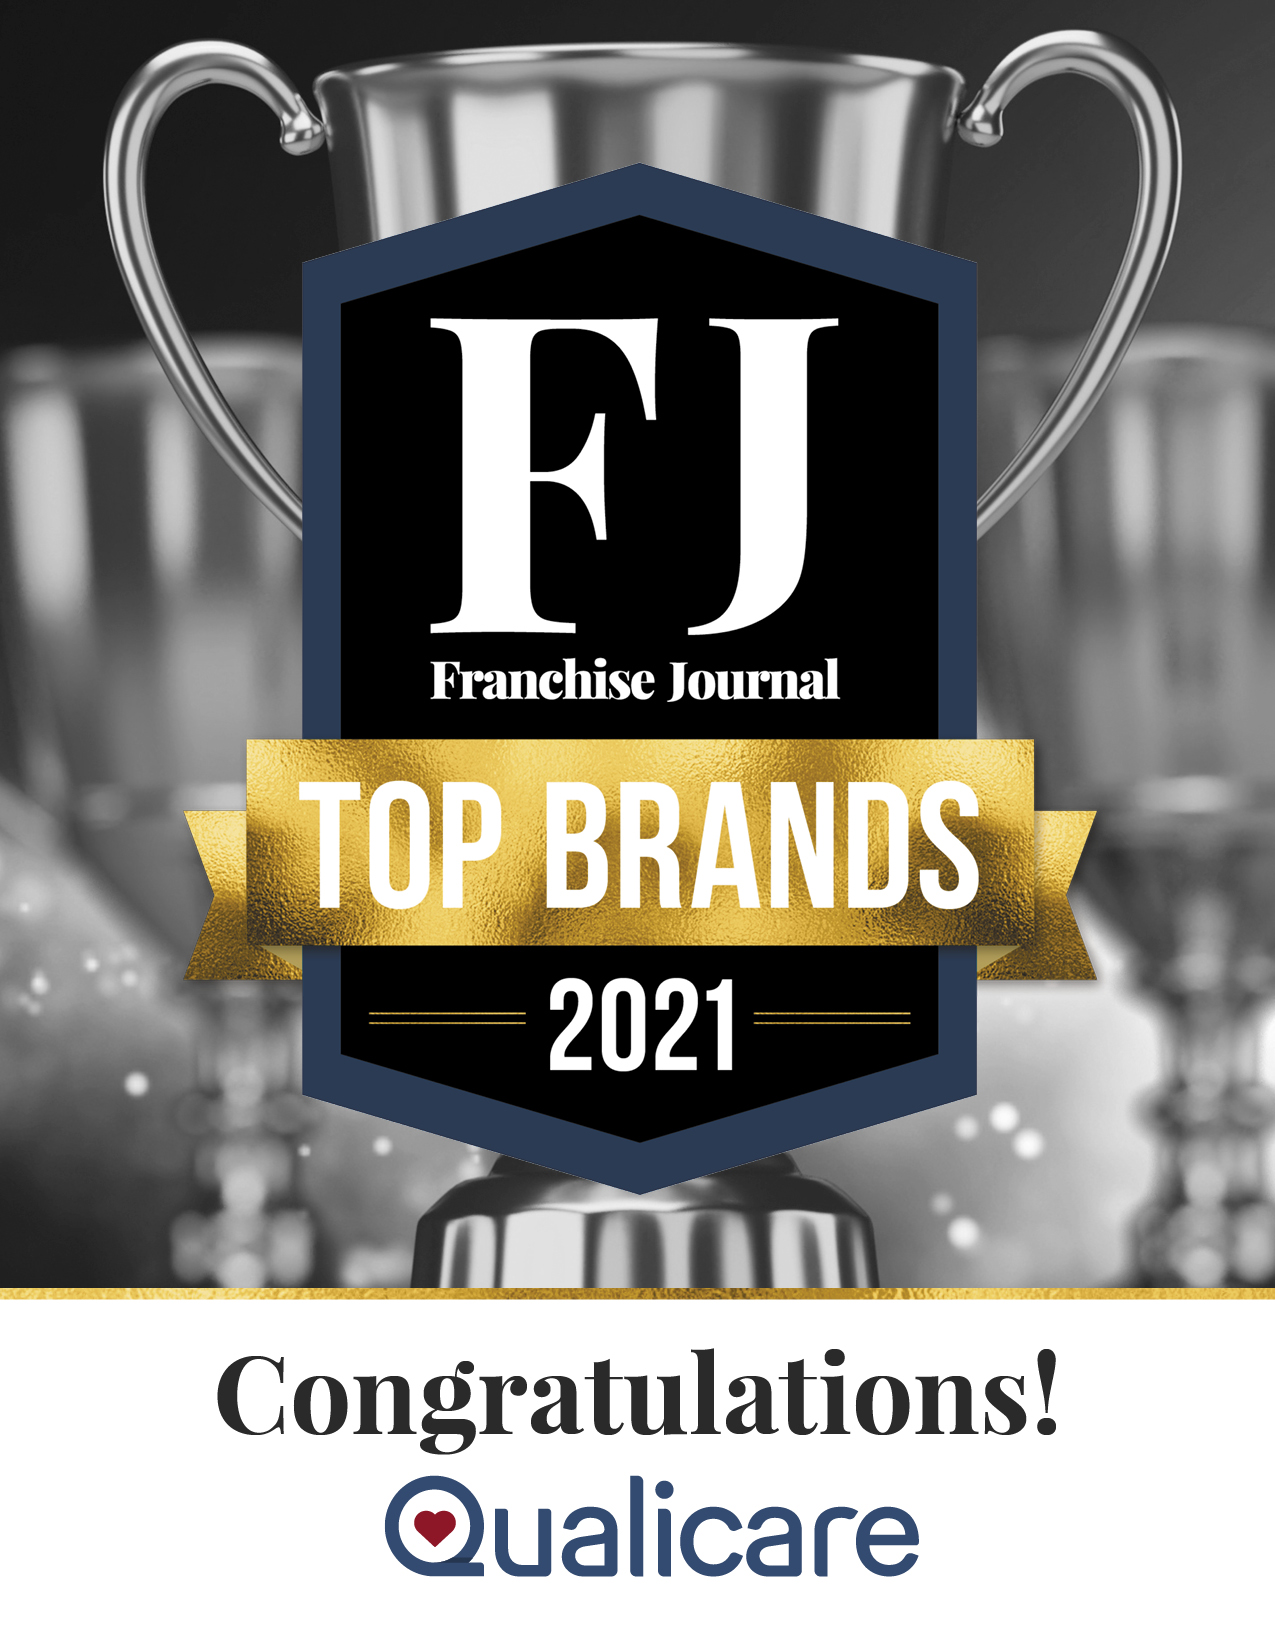 Franchise Journal Top Brands 2021 List